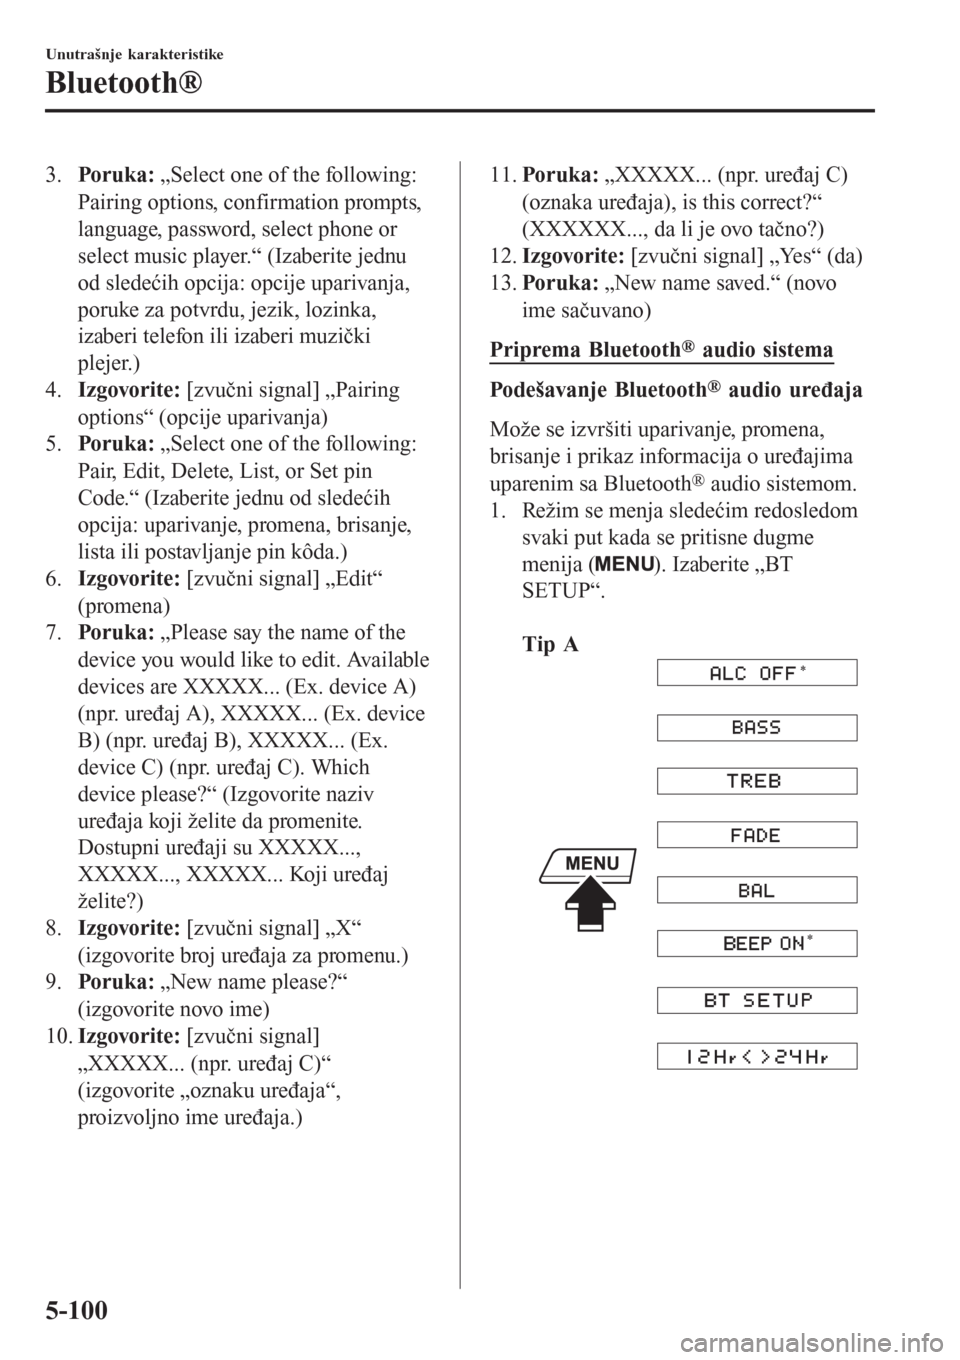 MAZDA MODEL 3 HATCHBACK 2015  Korisničko uputstvo (in Serbian) 3.Poruka: „Select one of the following:
Pairing options, confirmation prompts,
language, password, select phone or
select music player.“ (Izaberite jednu
od sledećih opcija: opcije uparivanja,
po